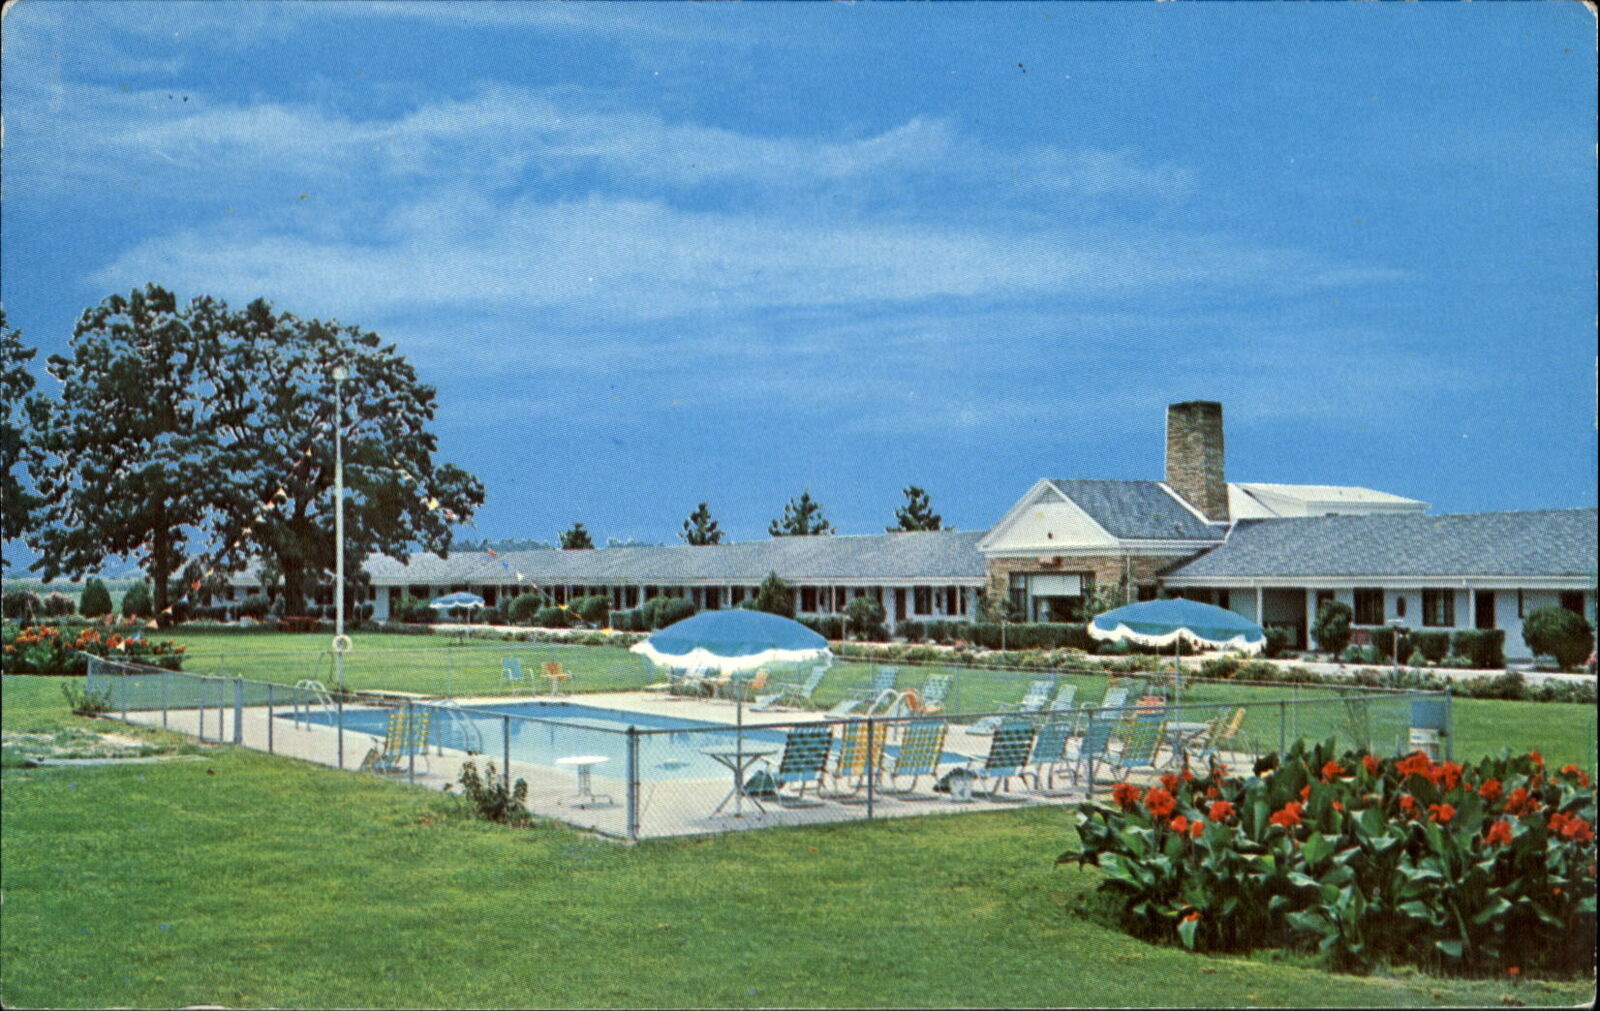 New Yorker Motel & Restaurant Rocky Mount North Carolina NC pool 1960s